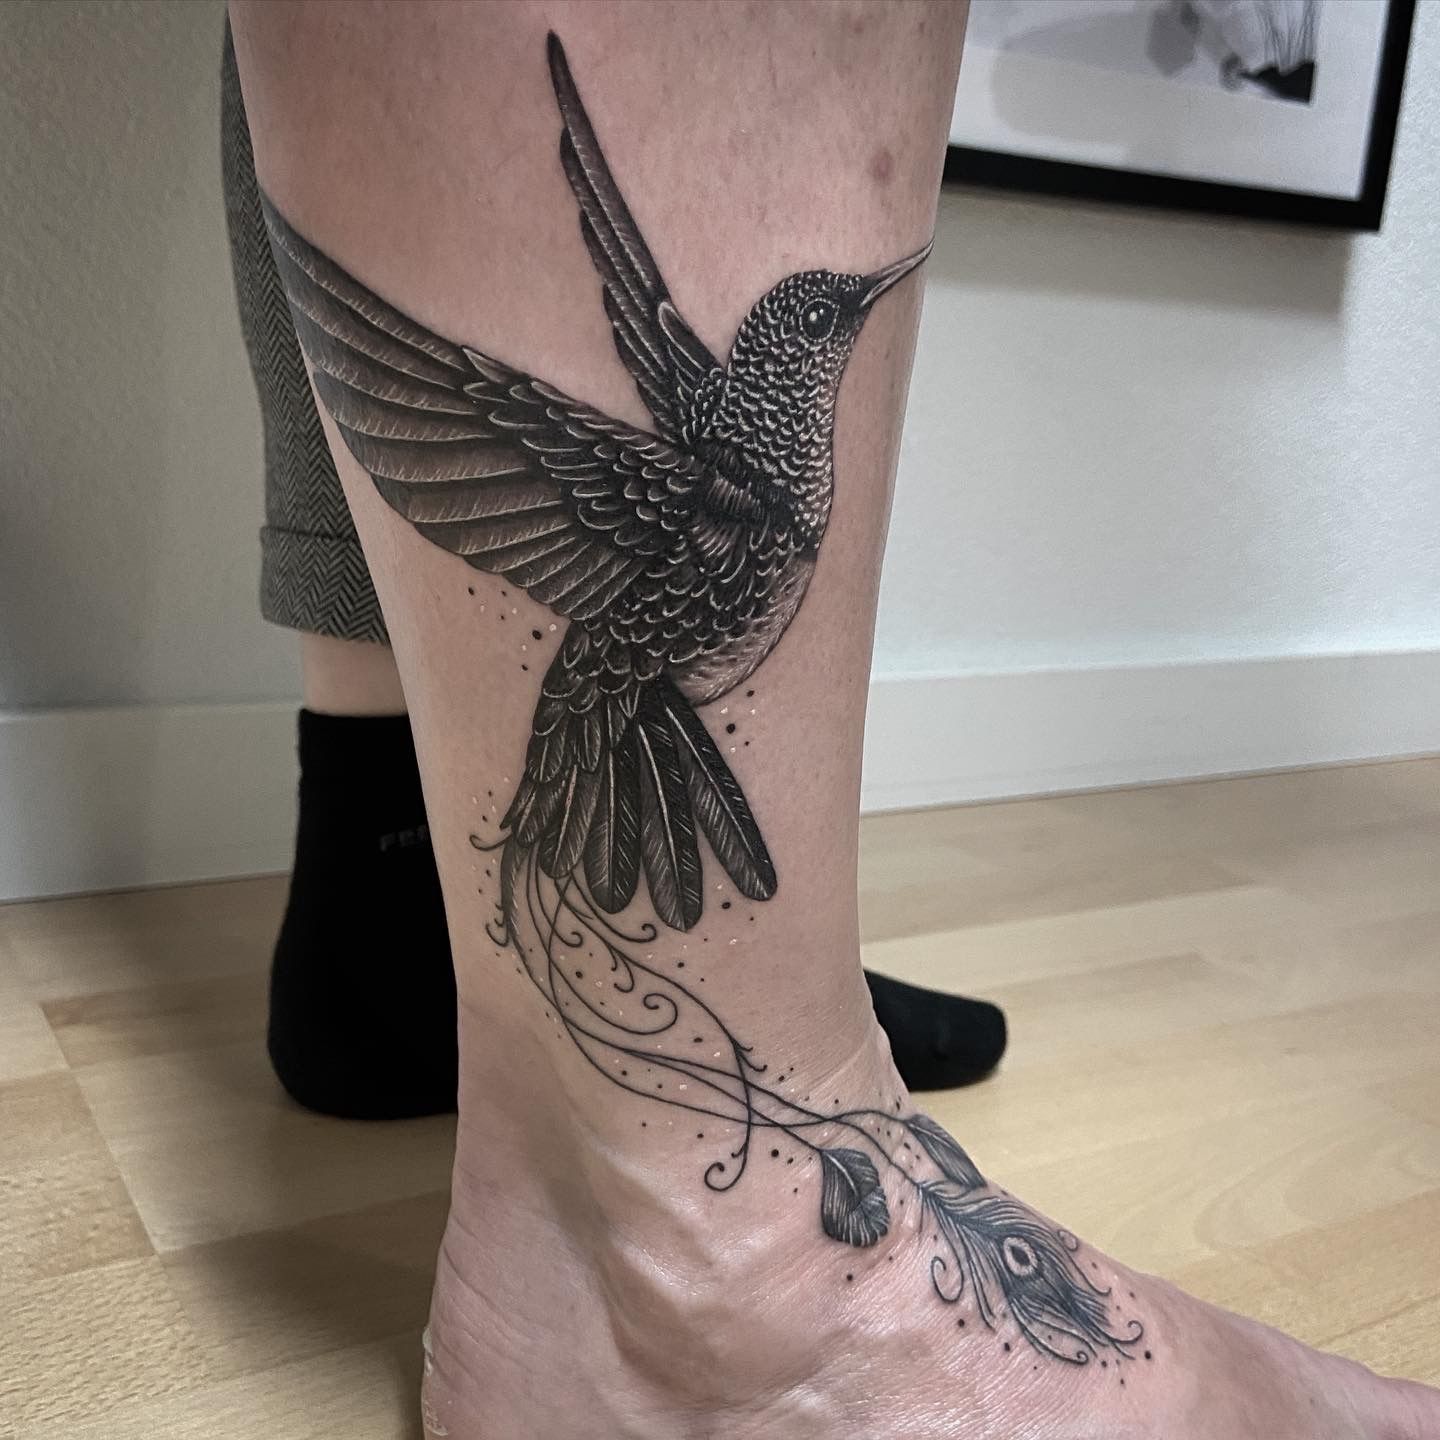 Pin by ChristelHoek on Tattoo inspiration | Small tattoos, Friend tattoos,  Little tattoos